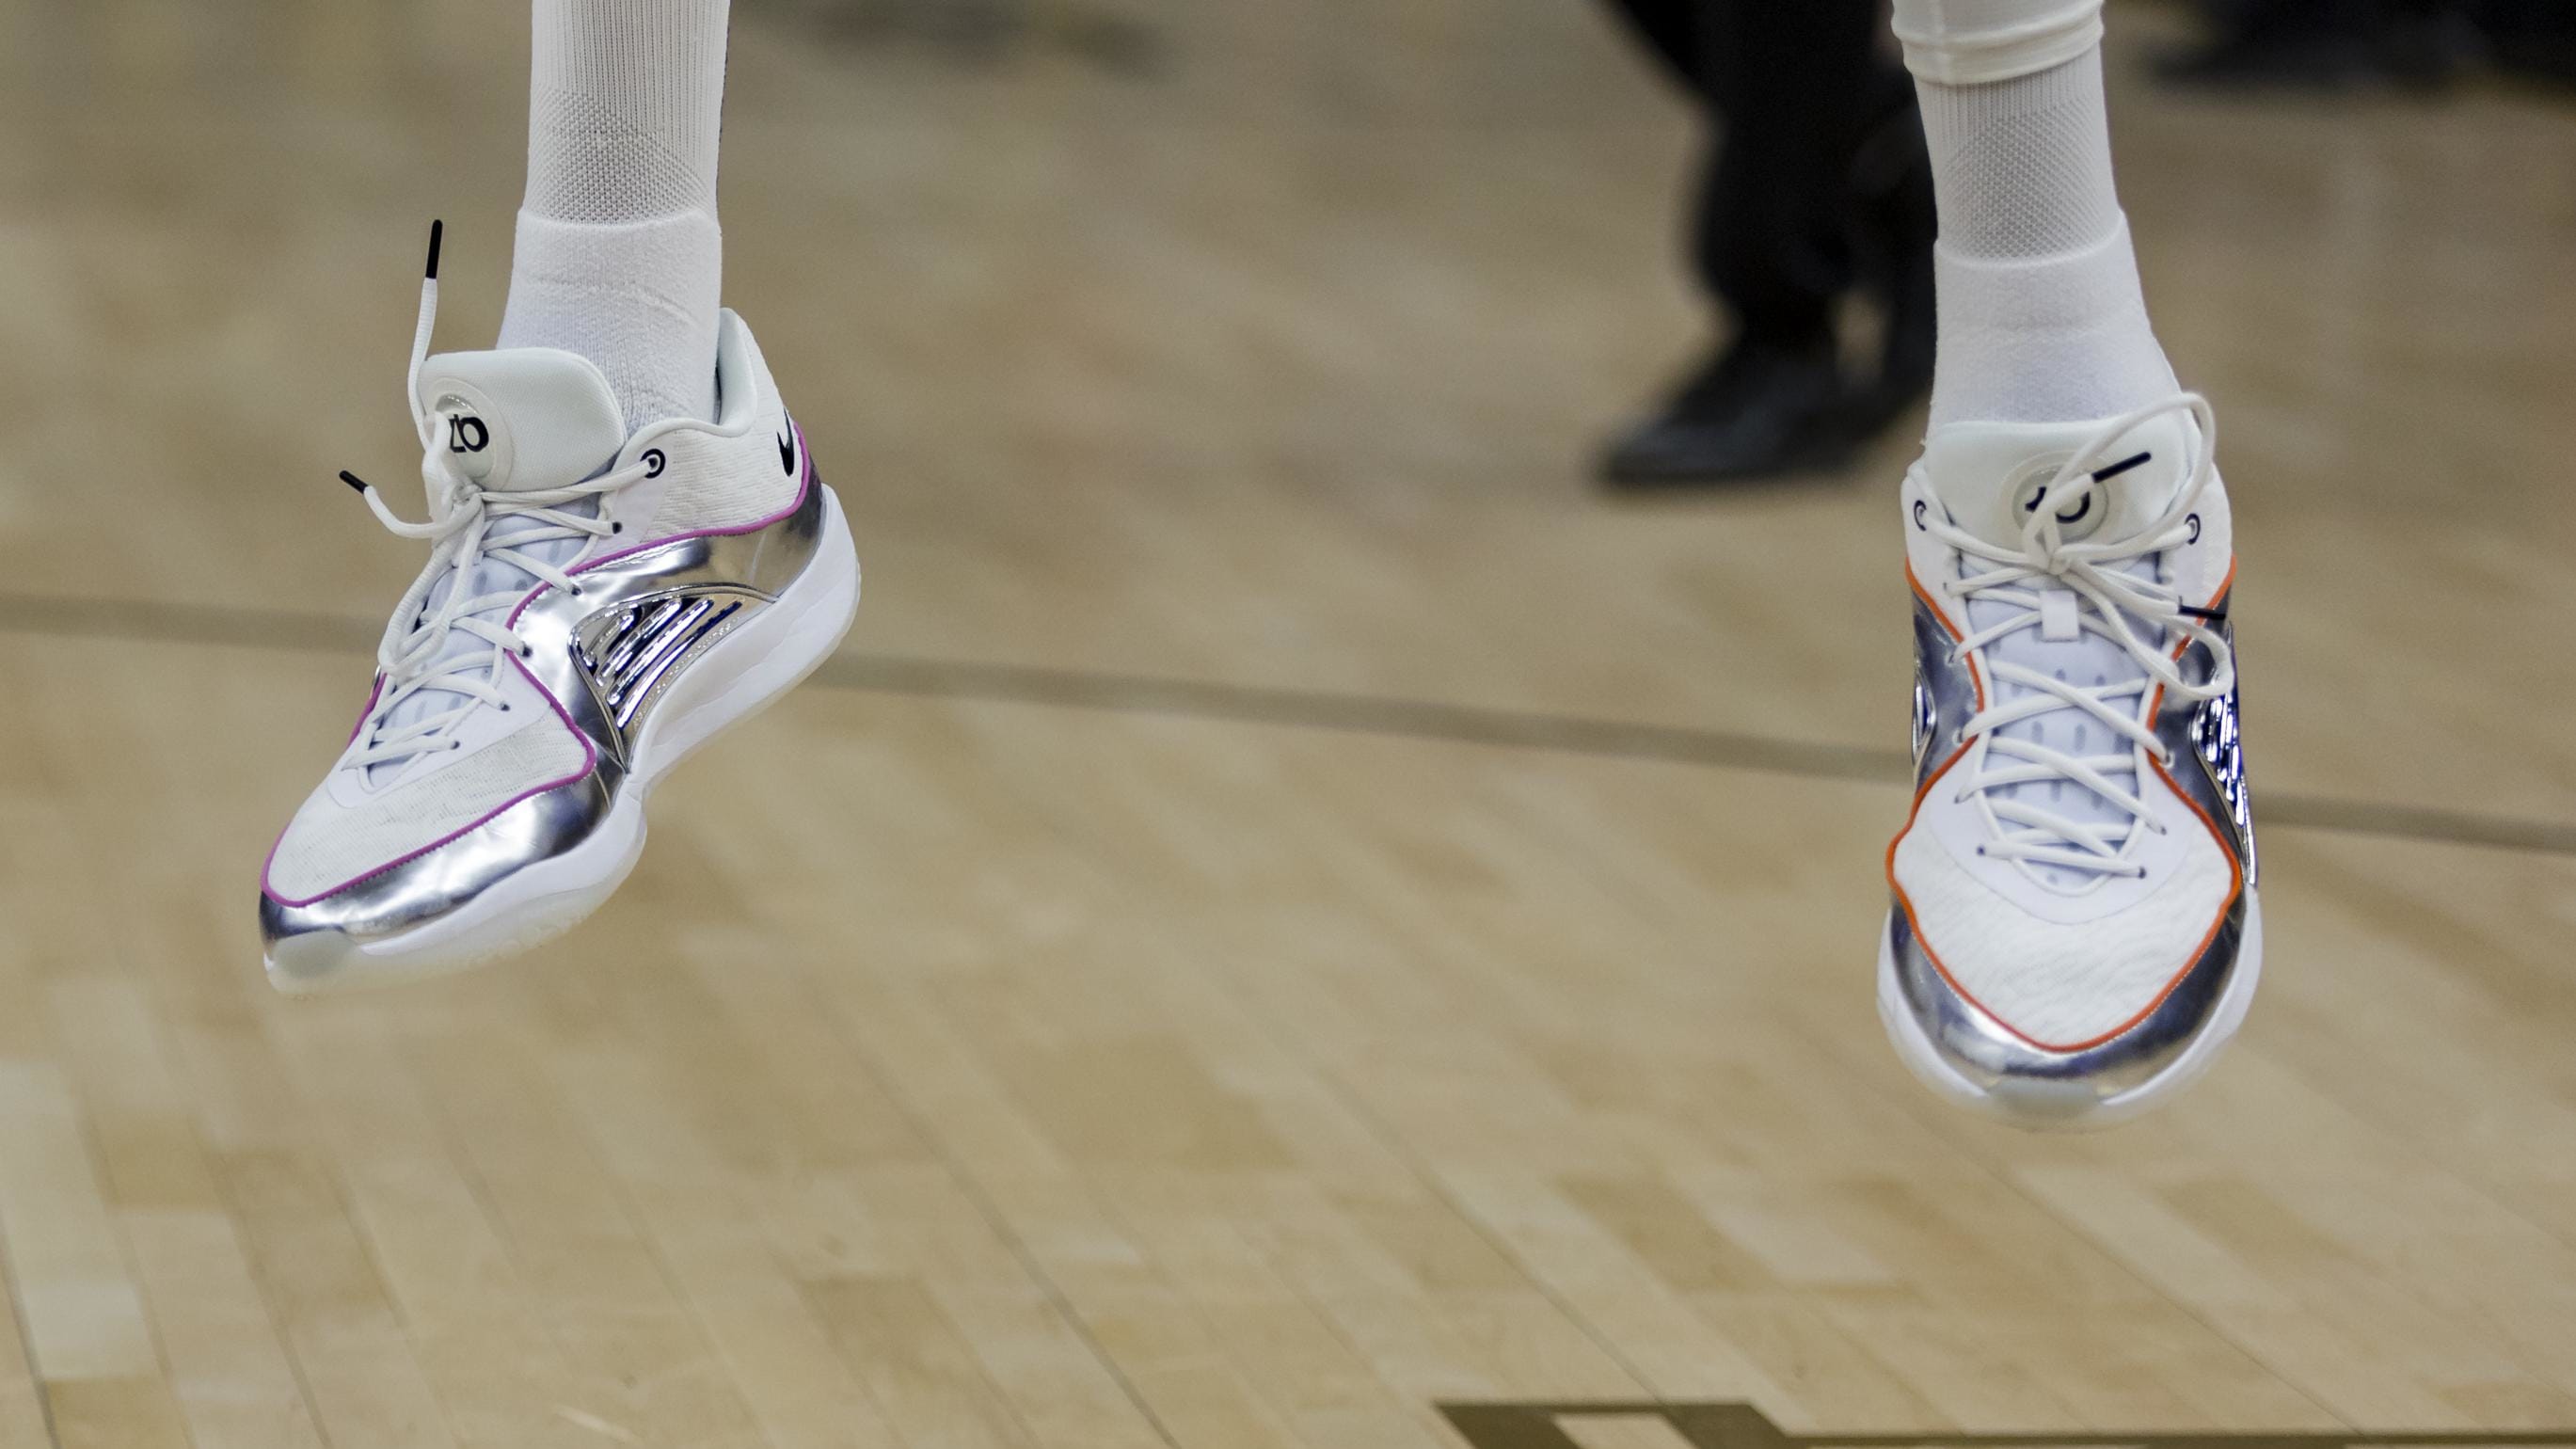 Phoenix Suns forward Kevin Durant wears silver Nike sneakers.